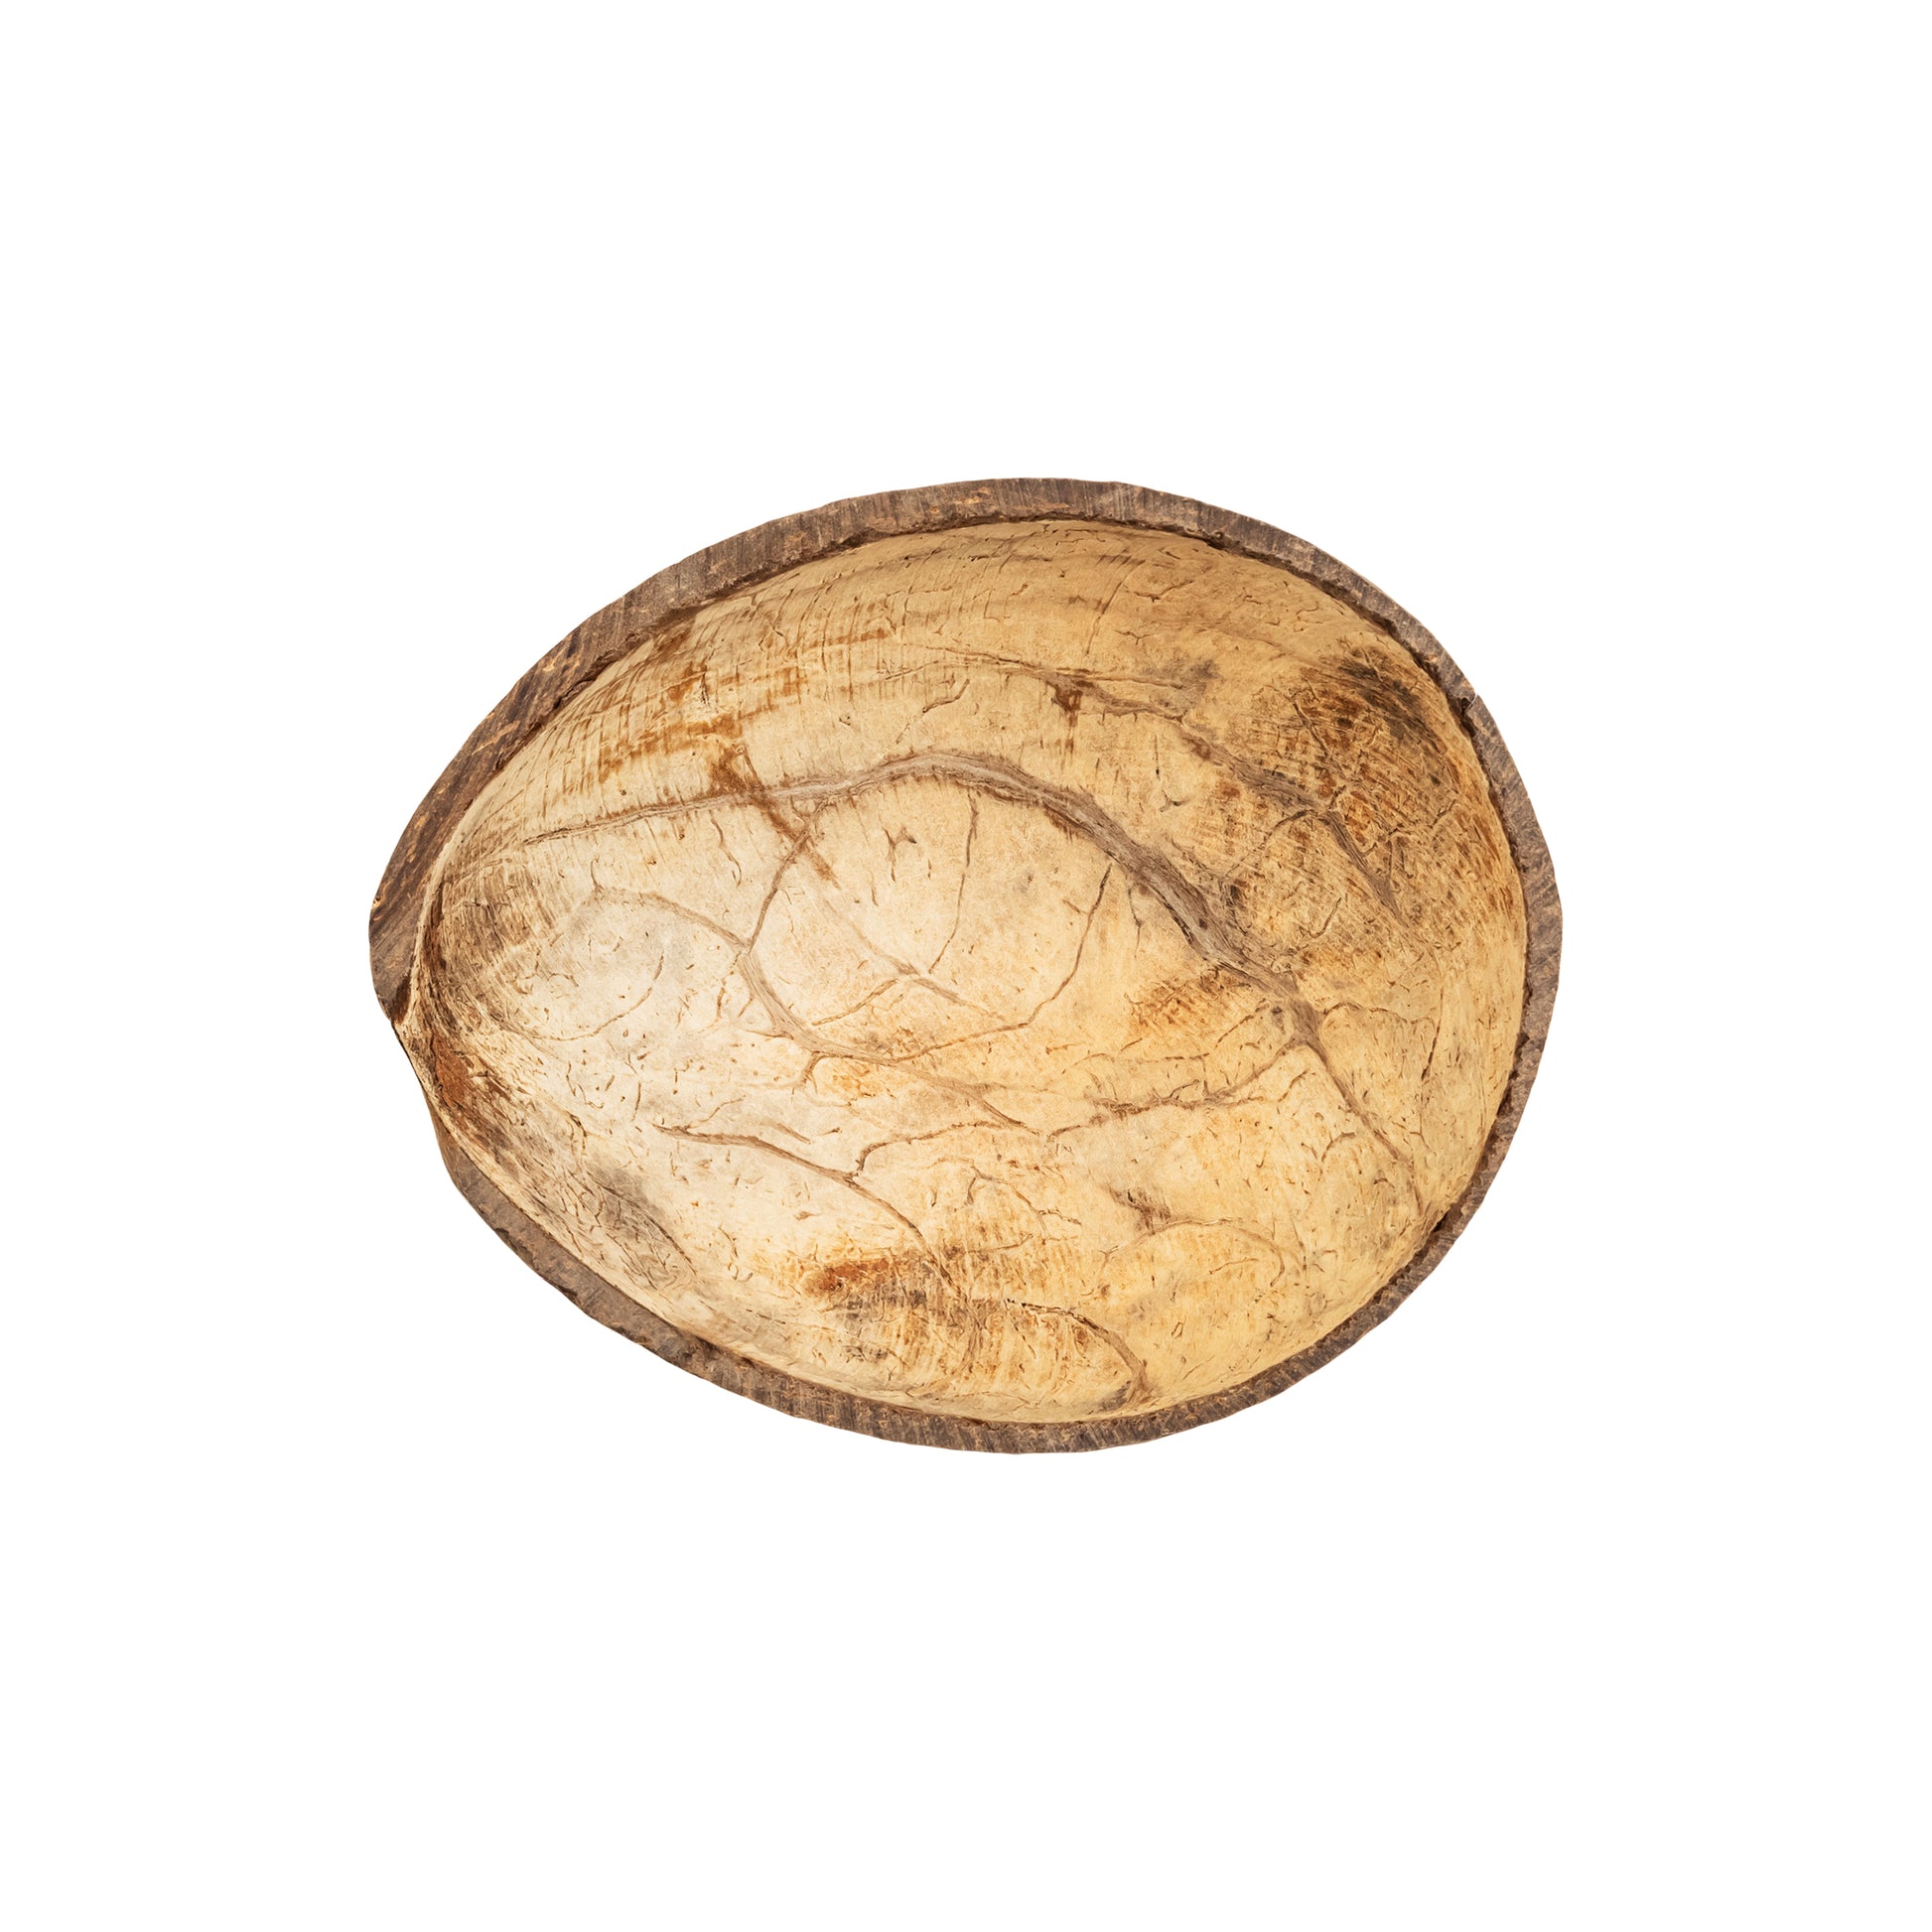 inside of coconut half shell smooth inside